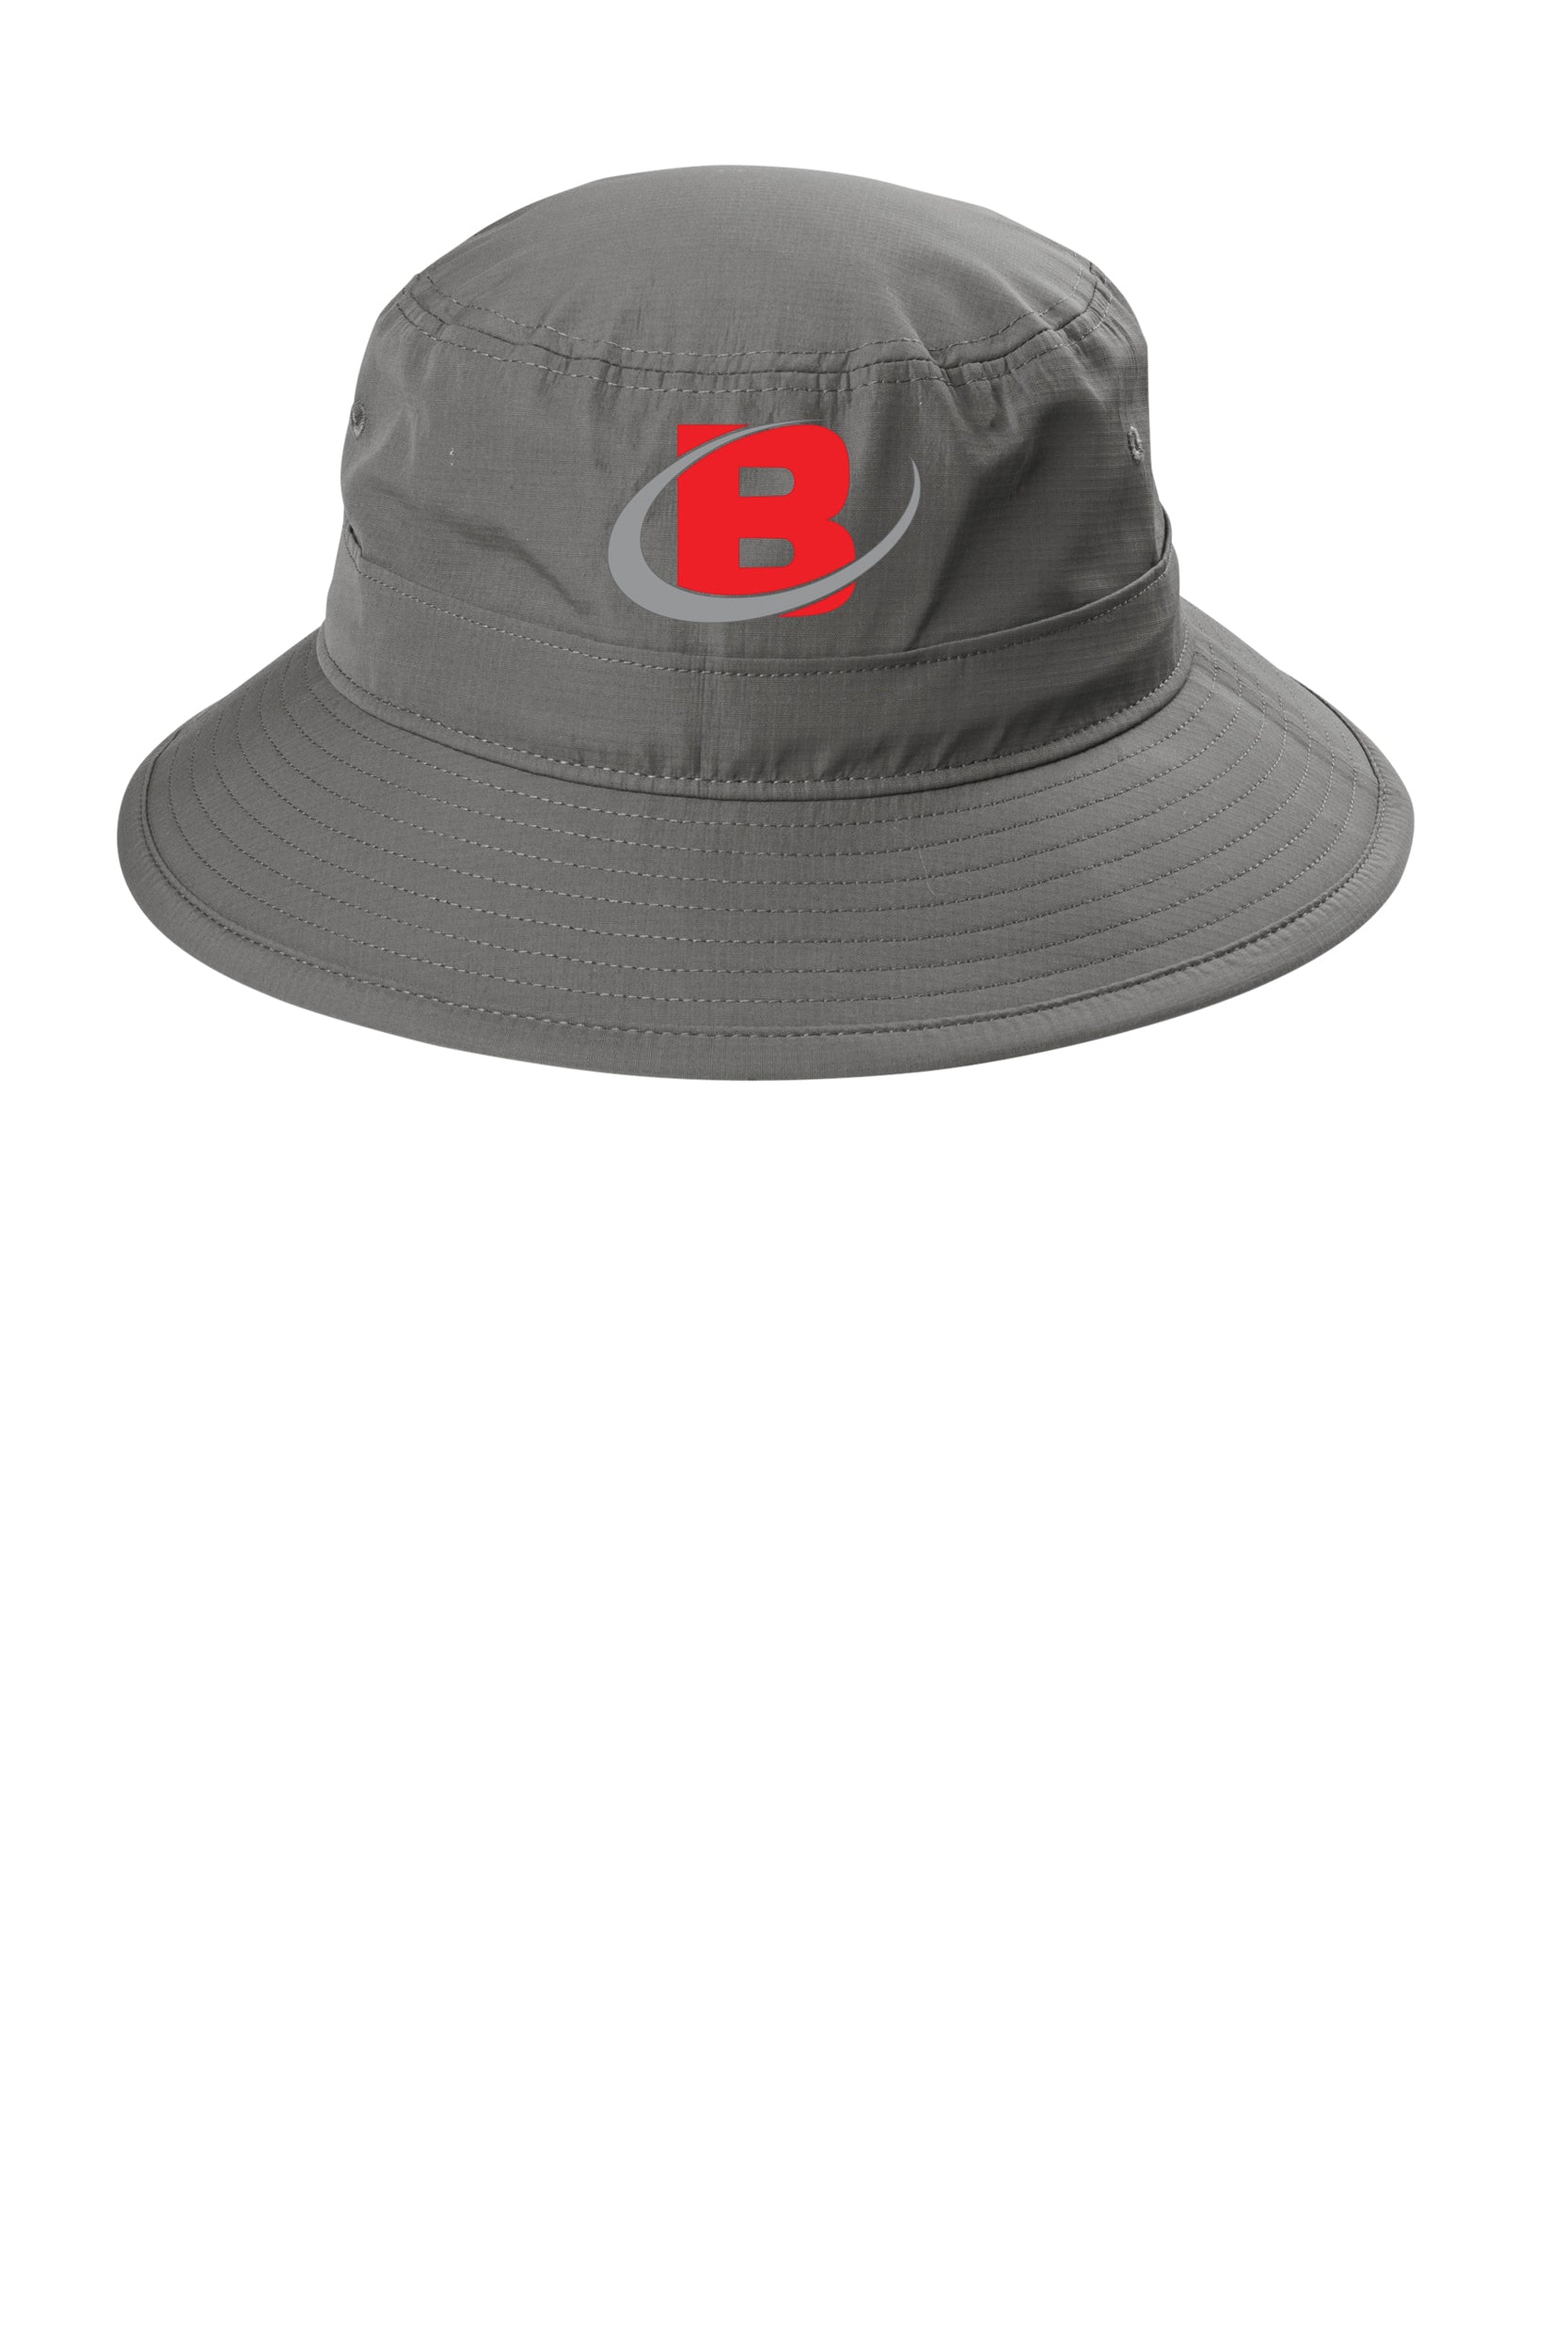 Bowman Excavating - Bucket Hat